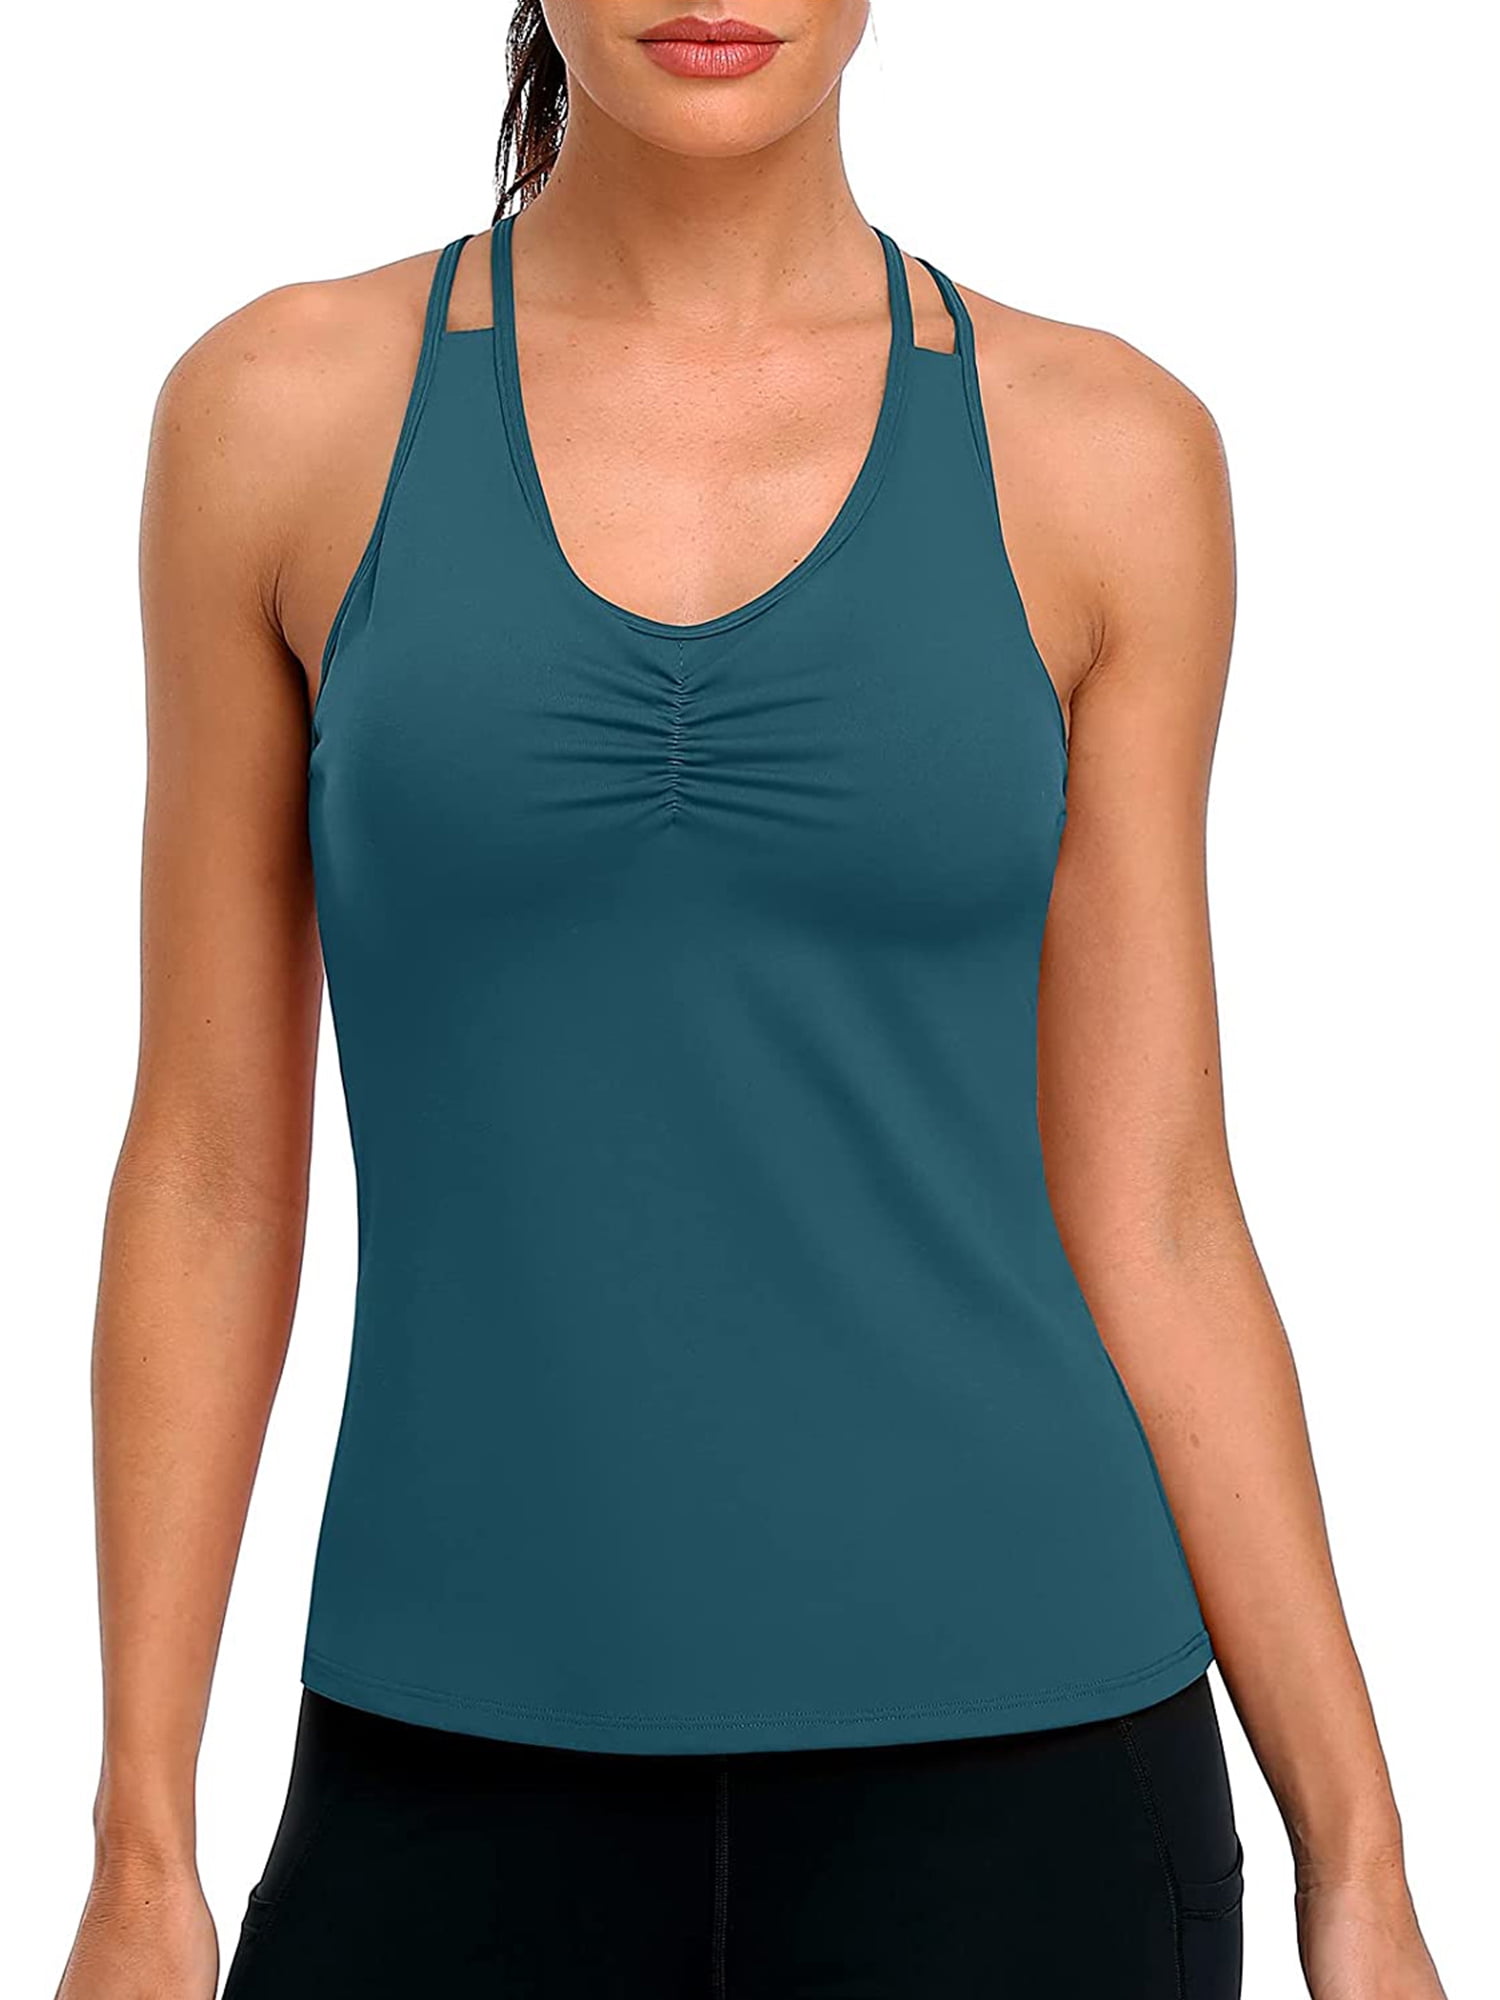 Women's Tank Top with Shelf Bra Adjustable Spaghetti Strap Athletic Yoga  Cami Shirt 